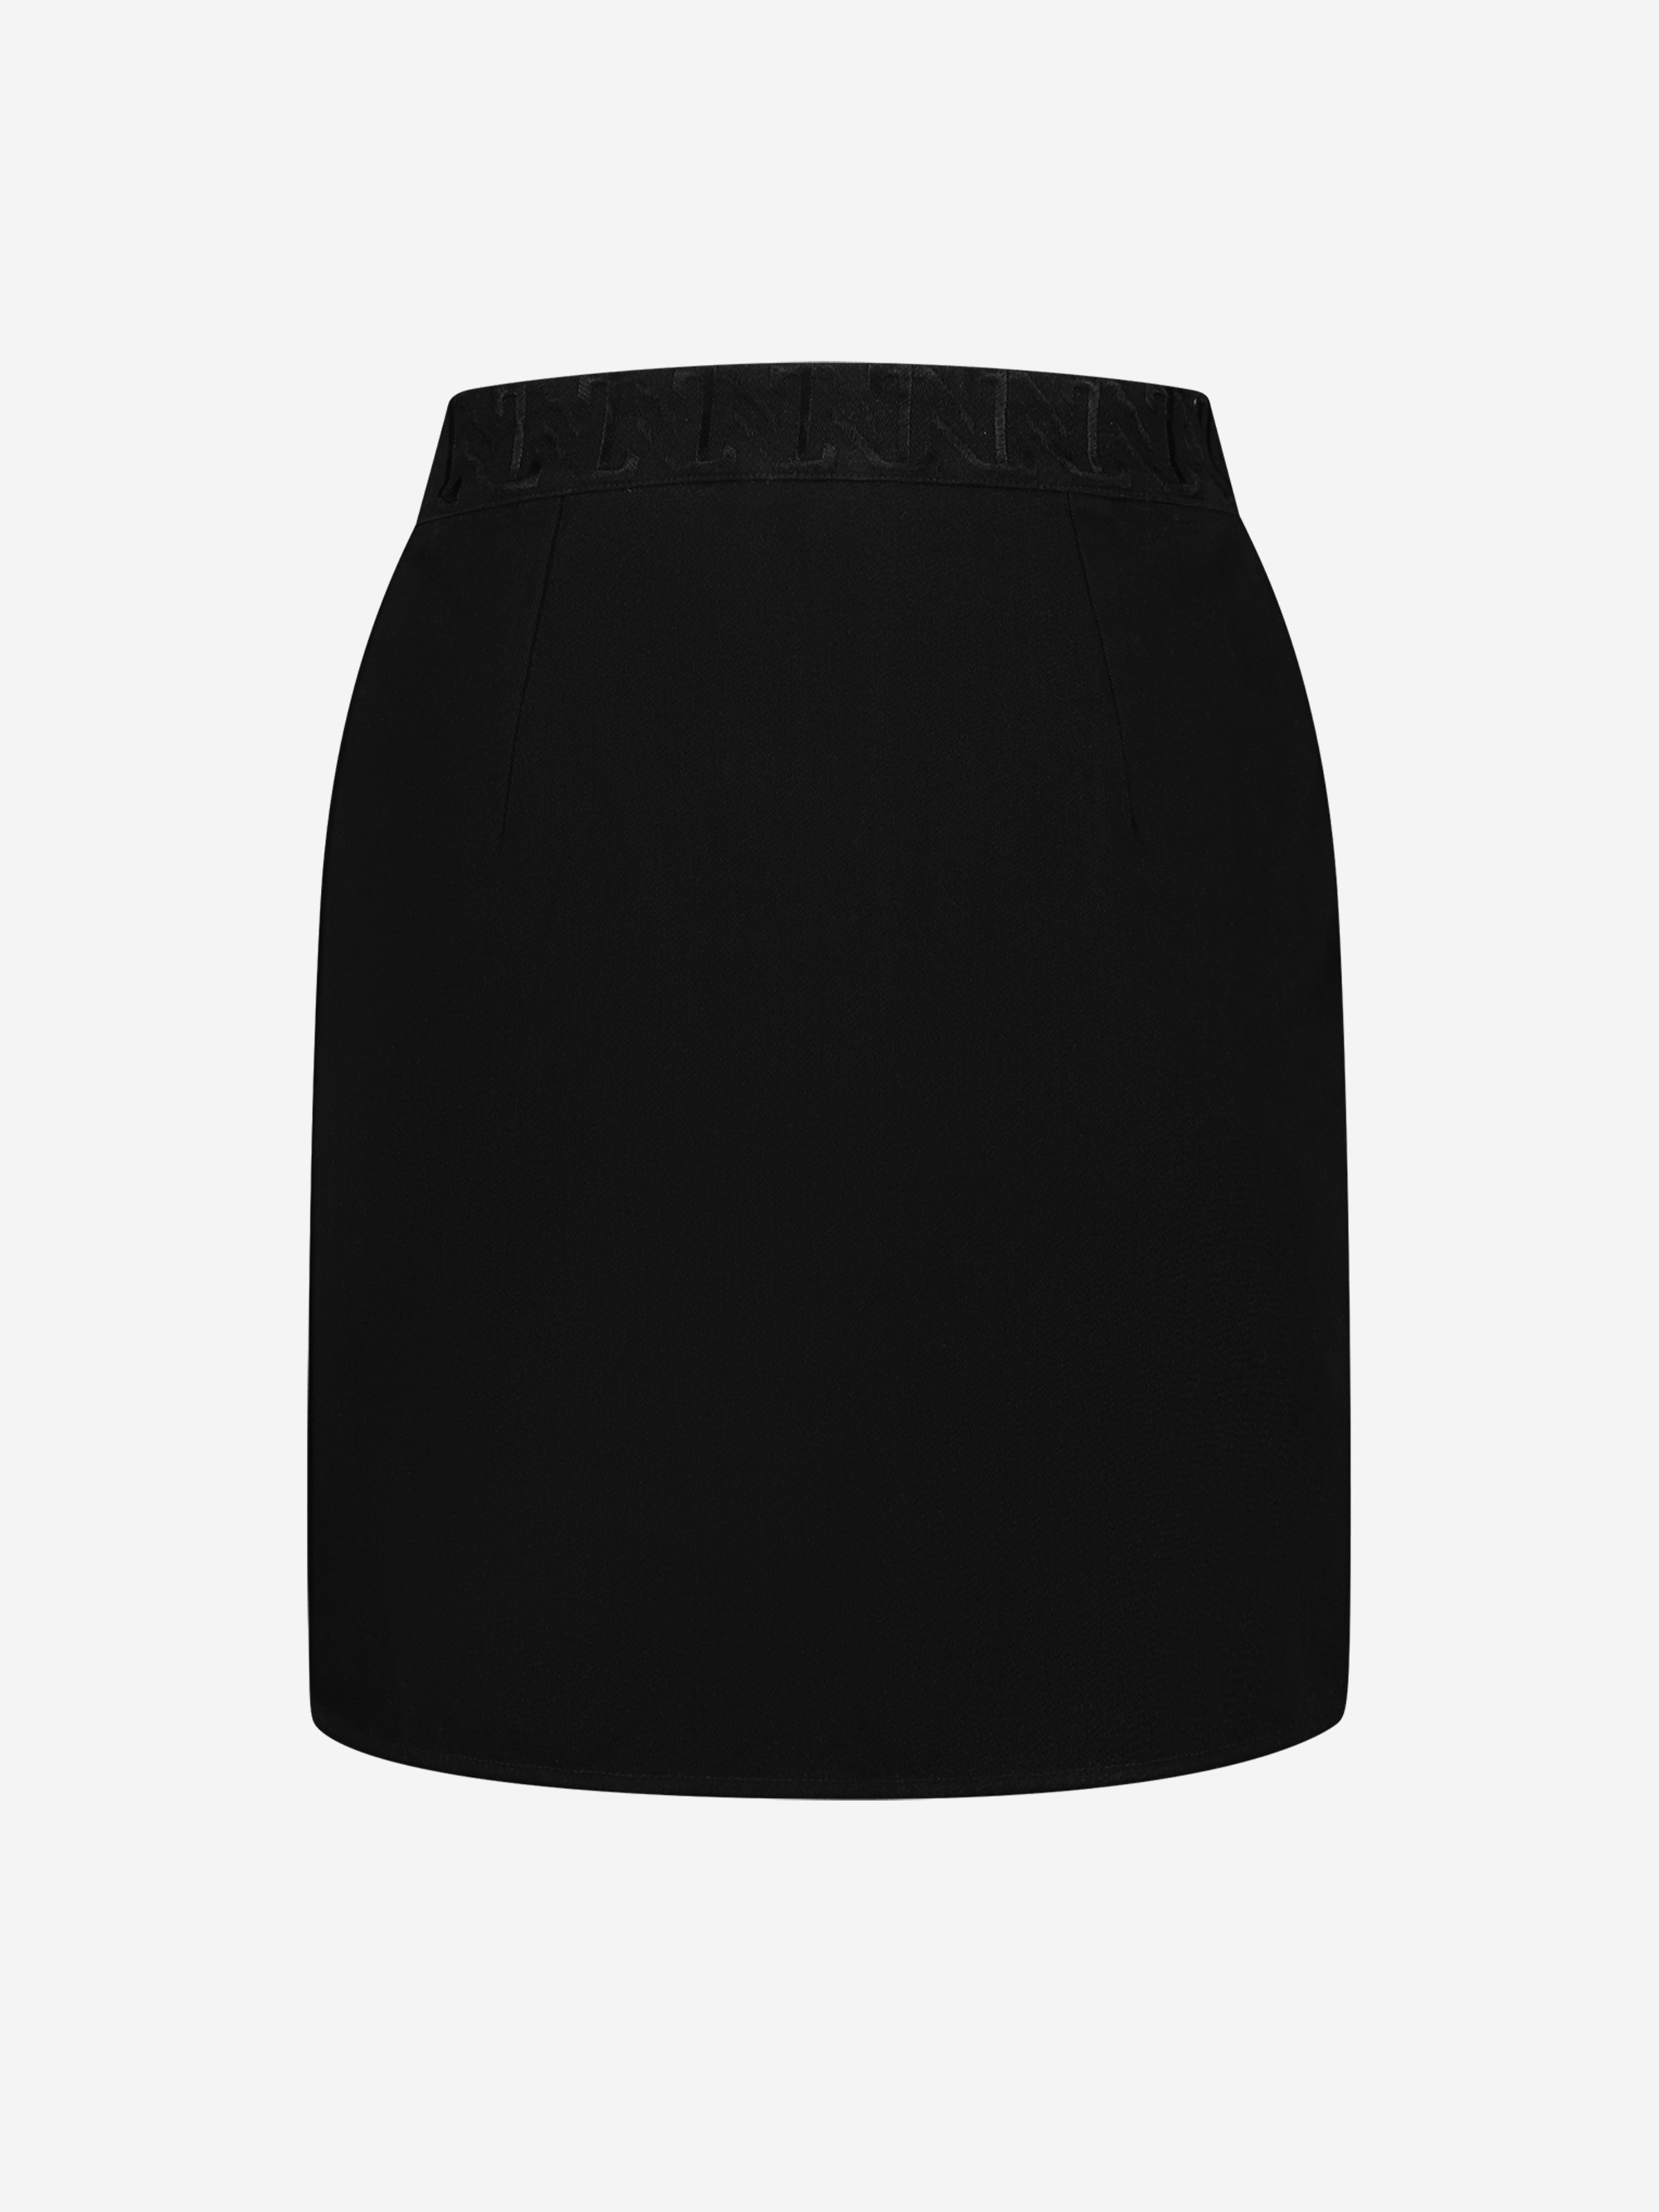 Bahamas Skirt